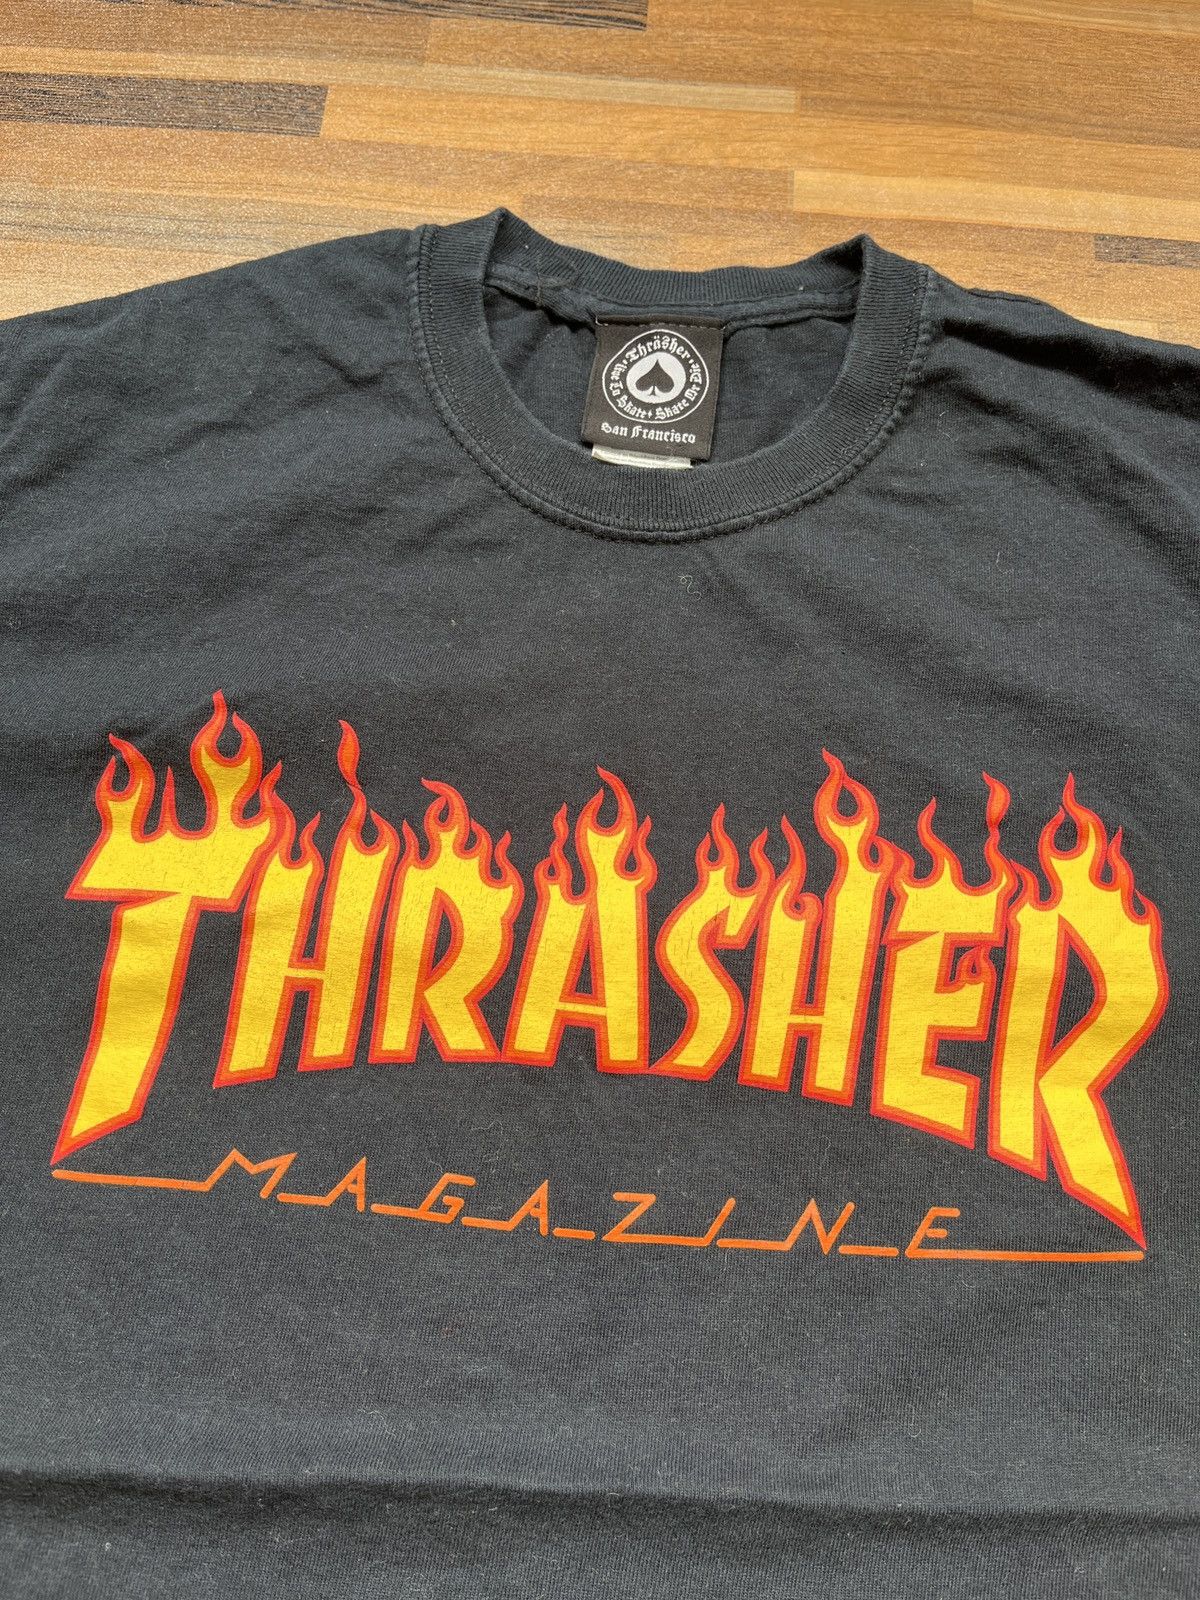 Thrasher Magazine T-Shirt Vintage Year 2000s - 3